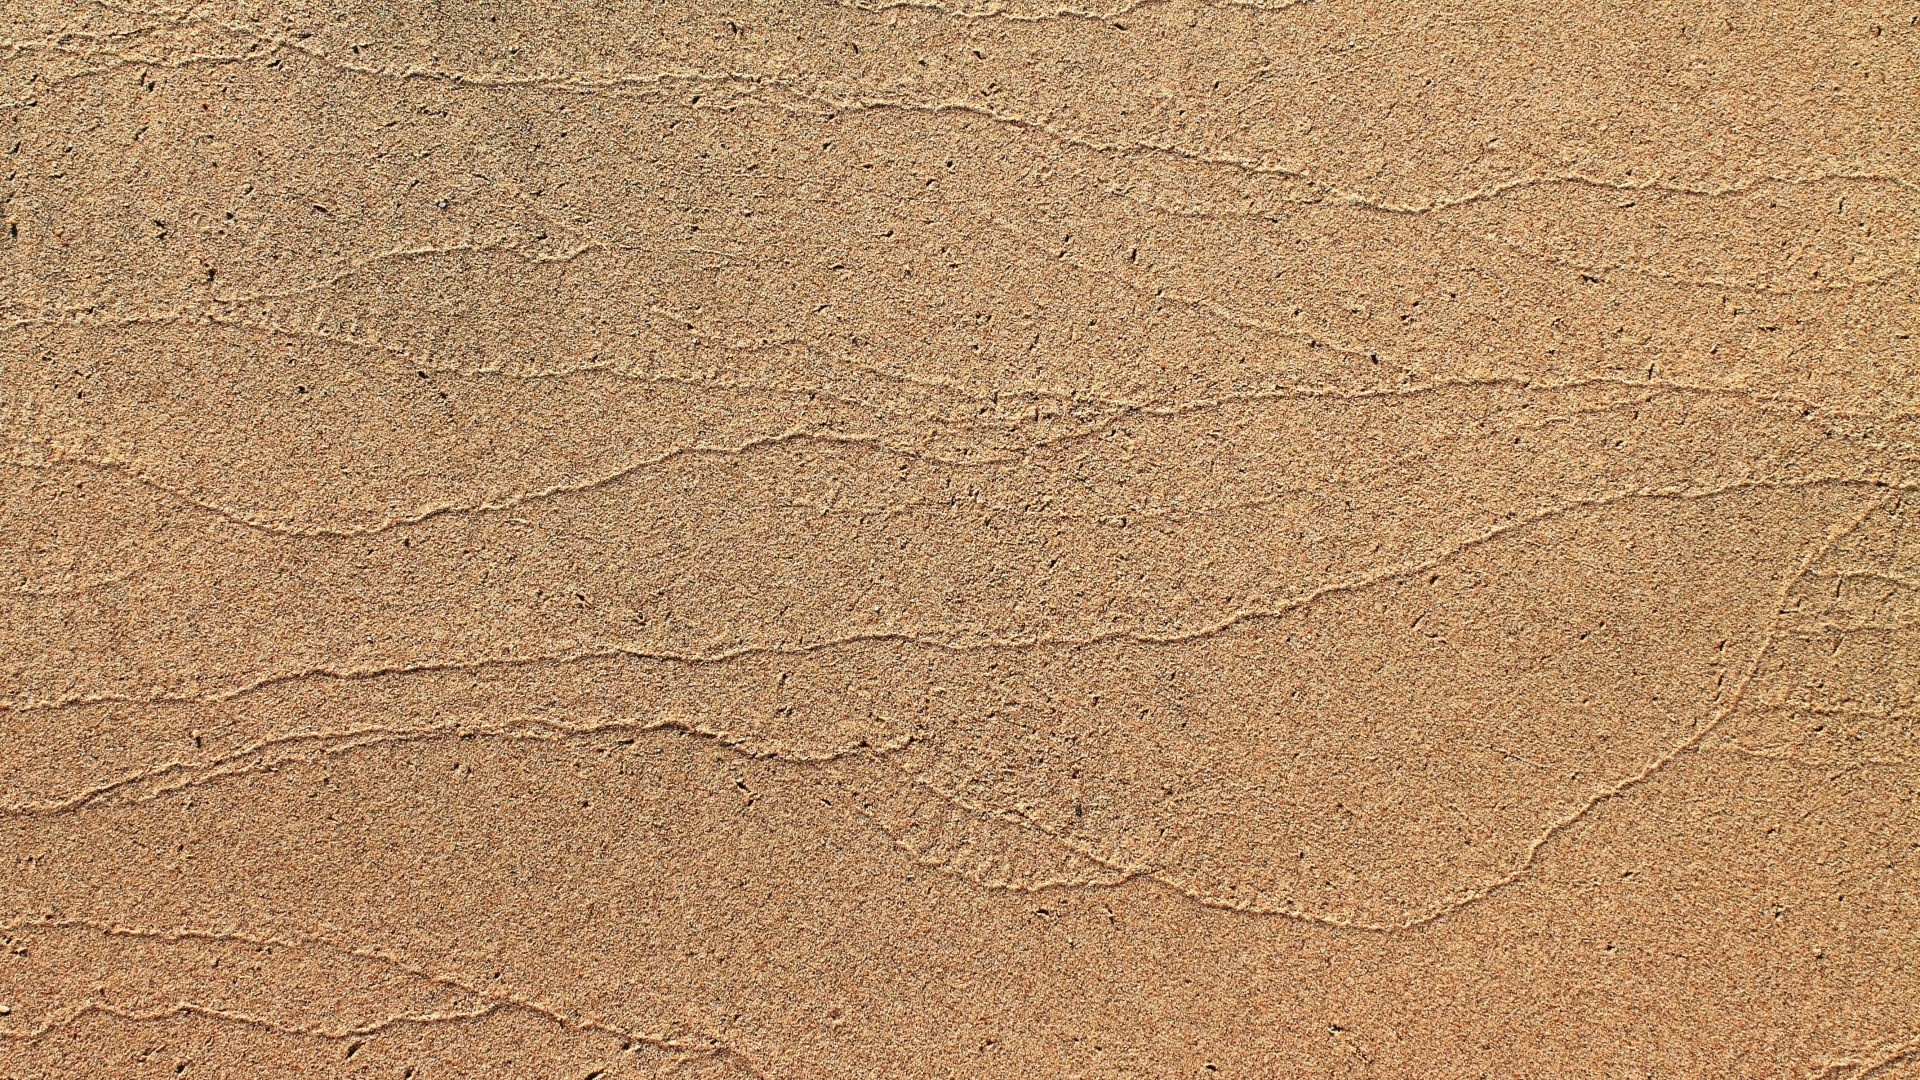 Texture Sand Image